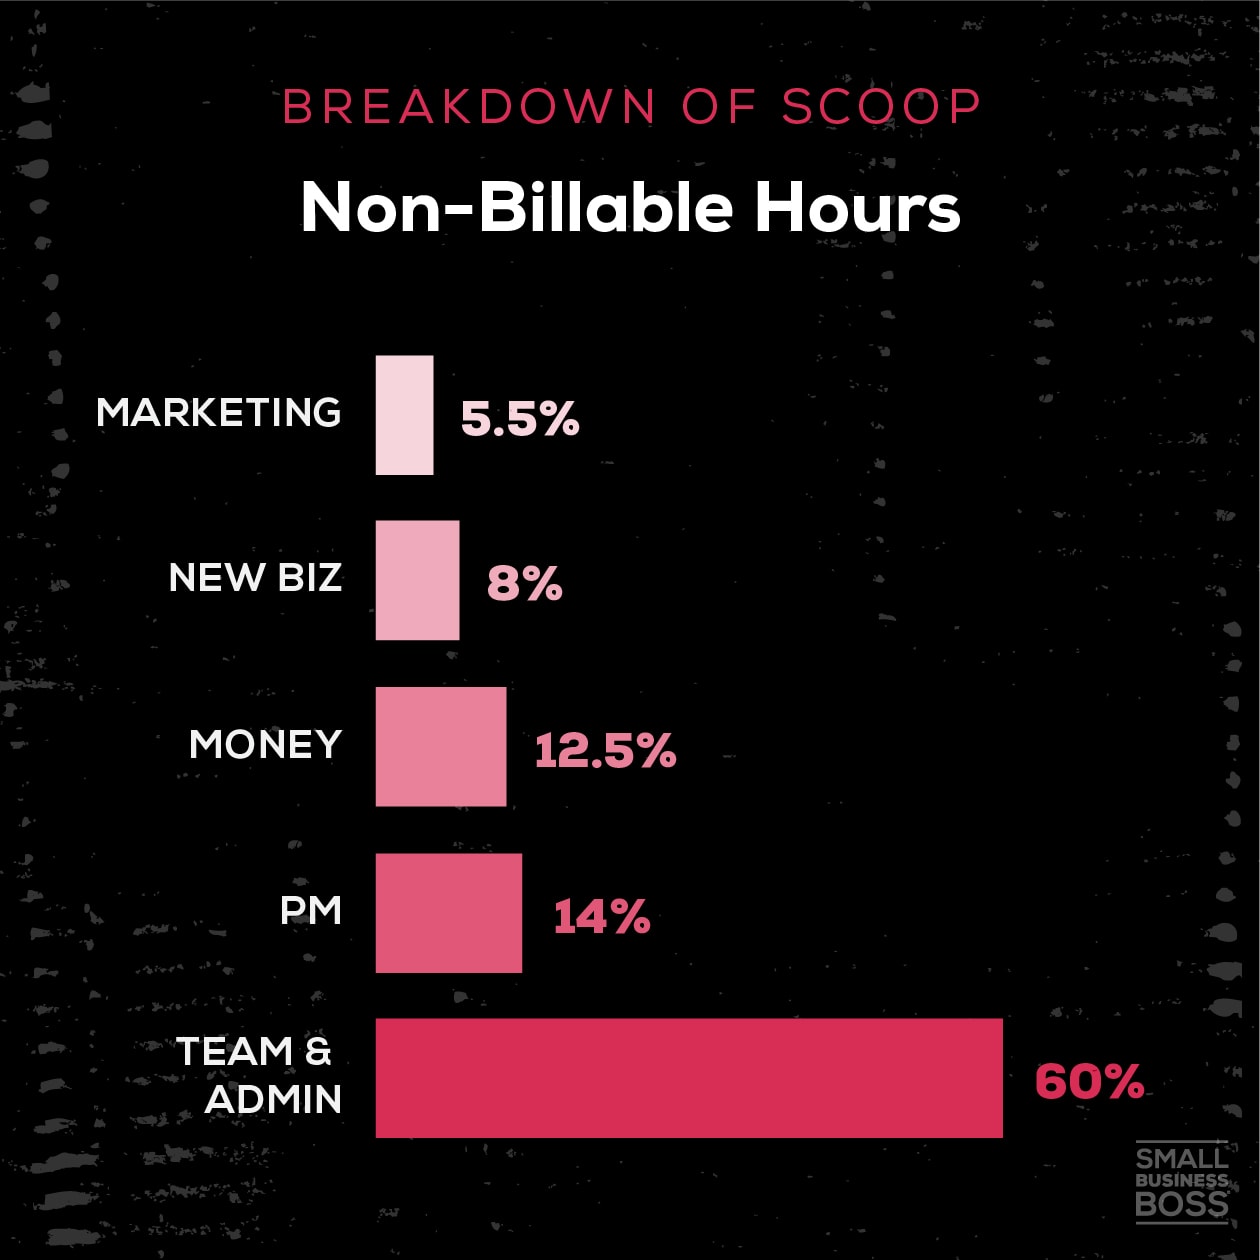 image breakdown of non-billable hours